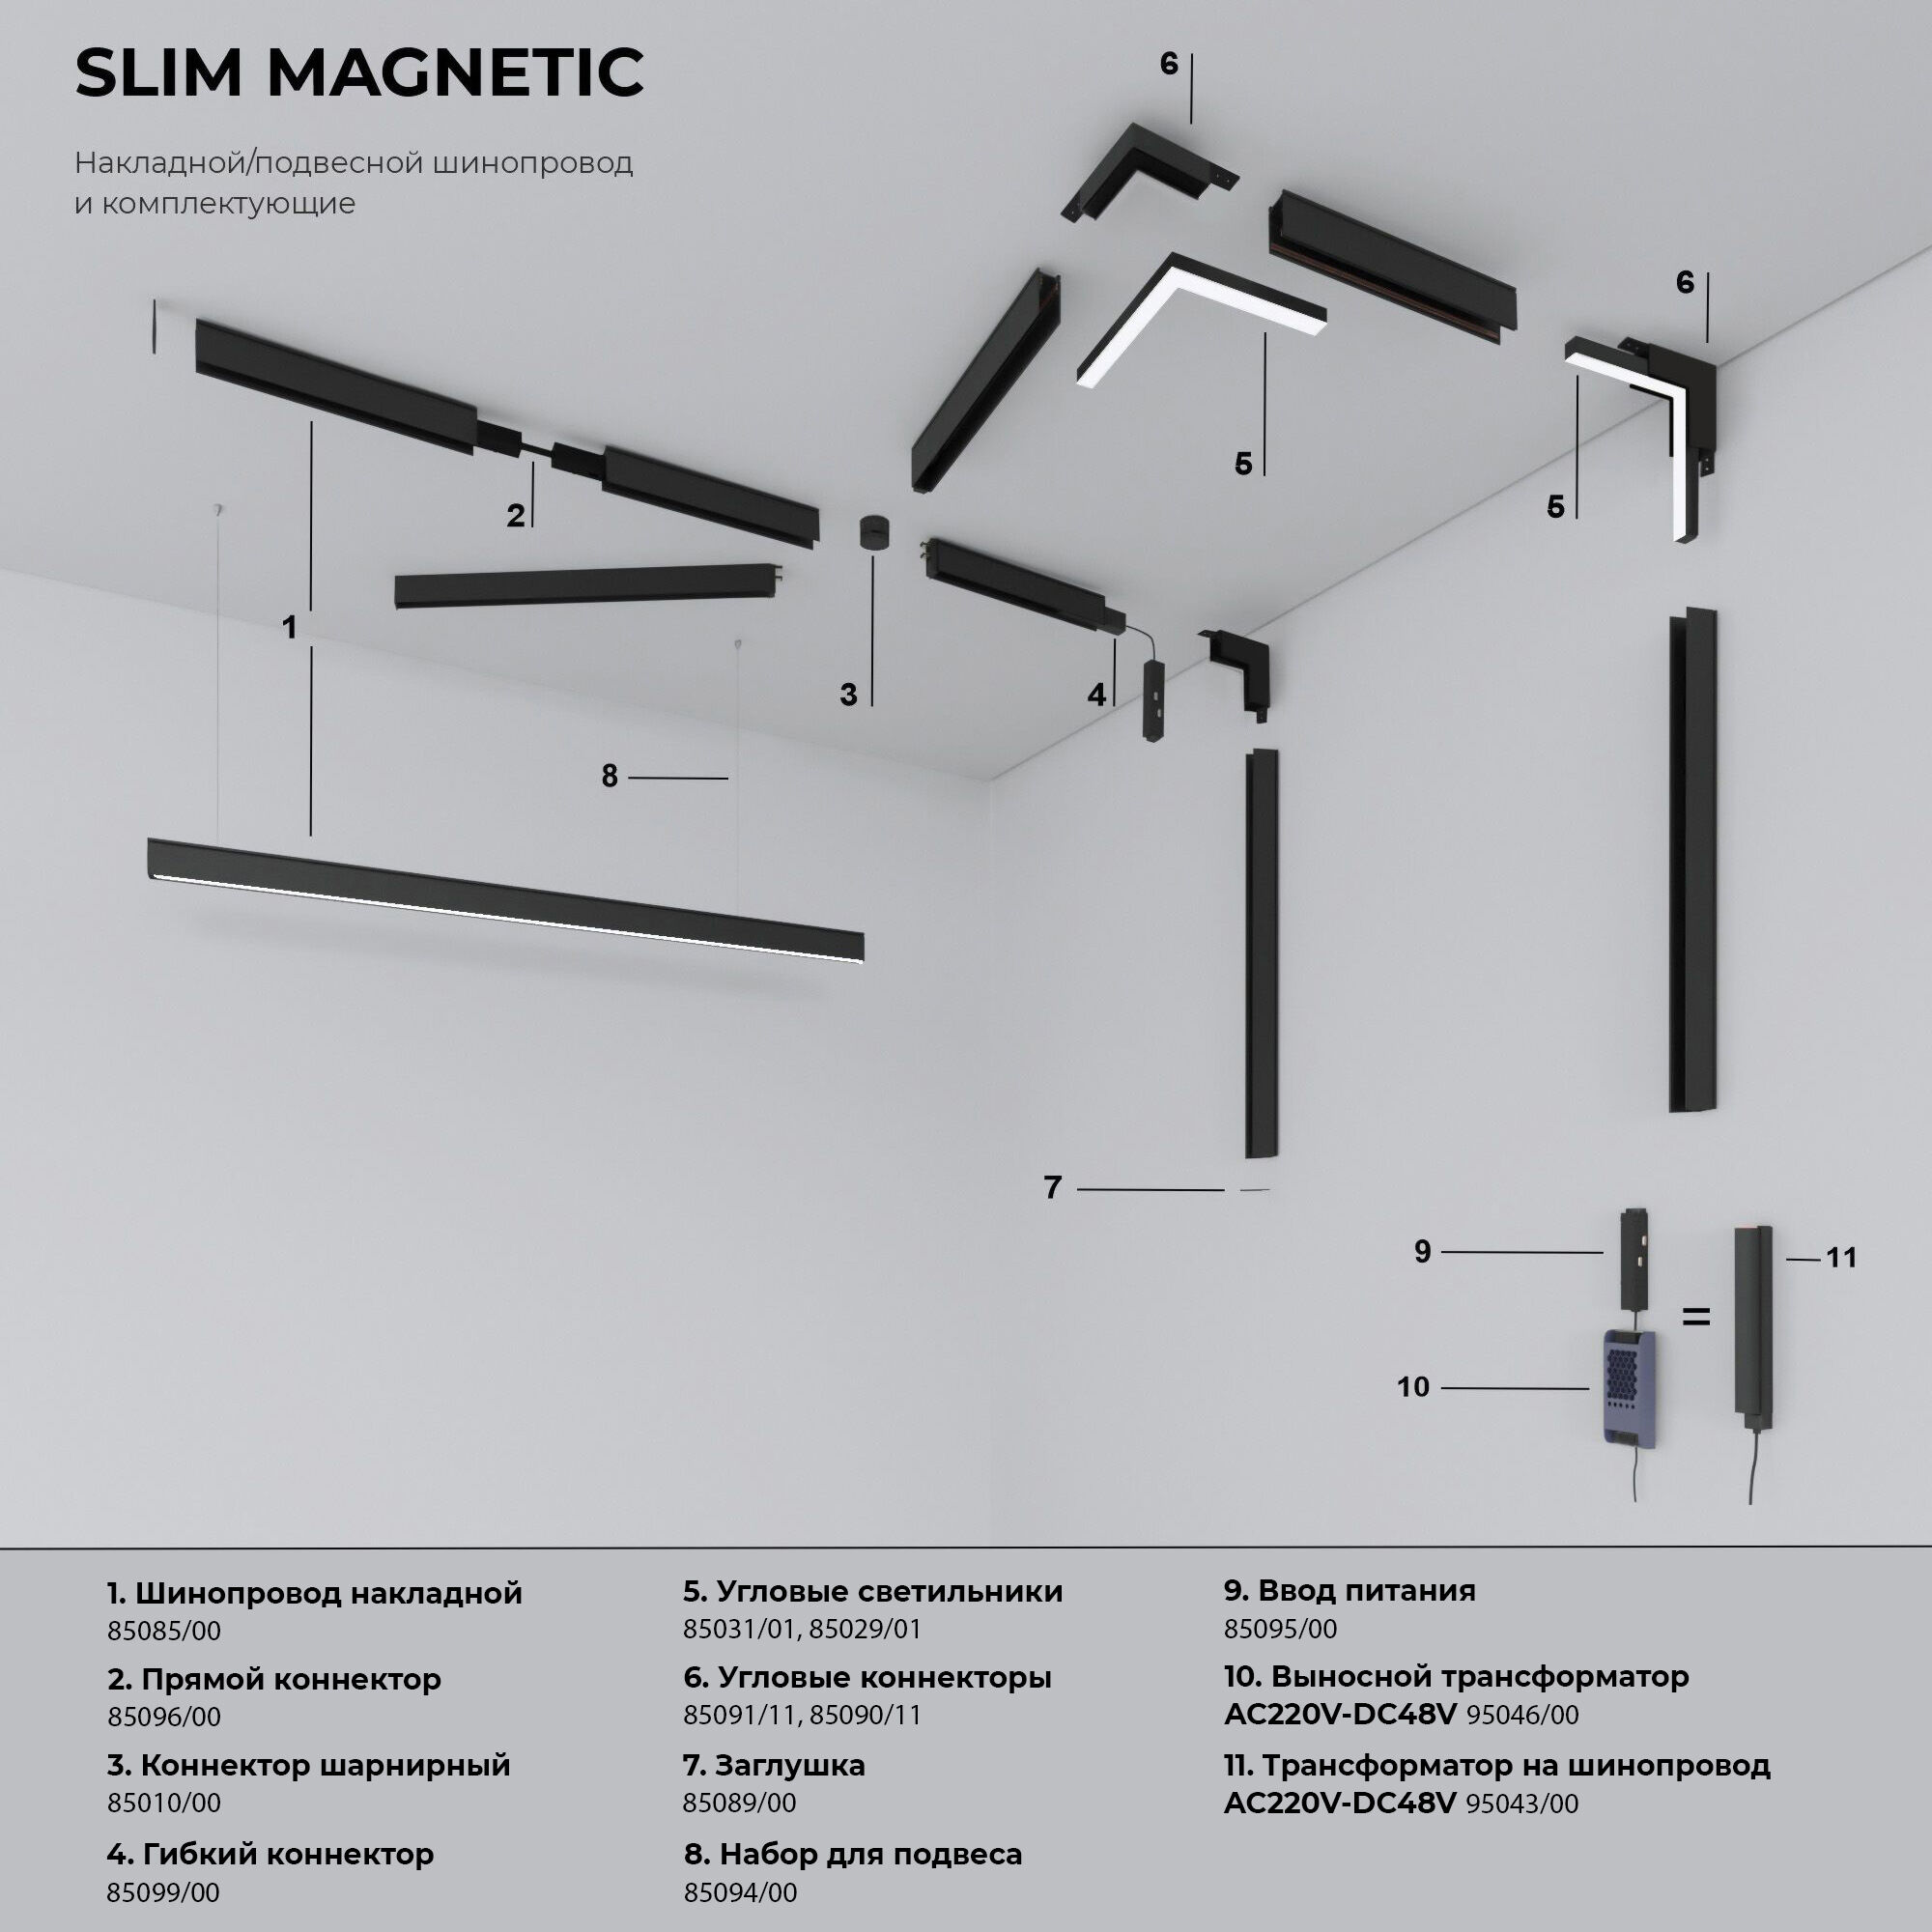 Slim Magnetic Набор для подвеса белый (2м) 85094/00